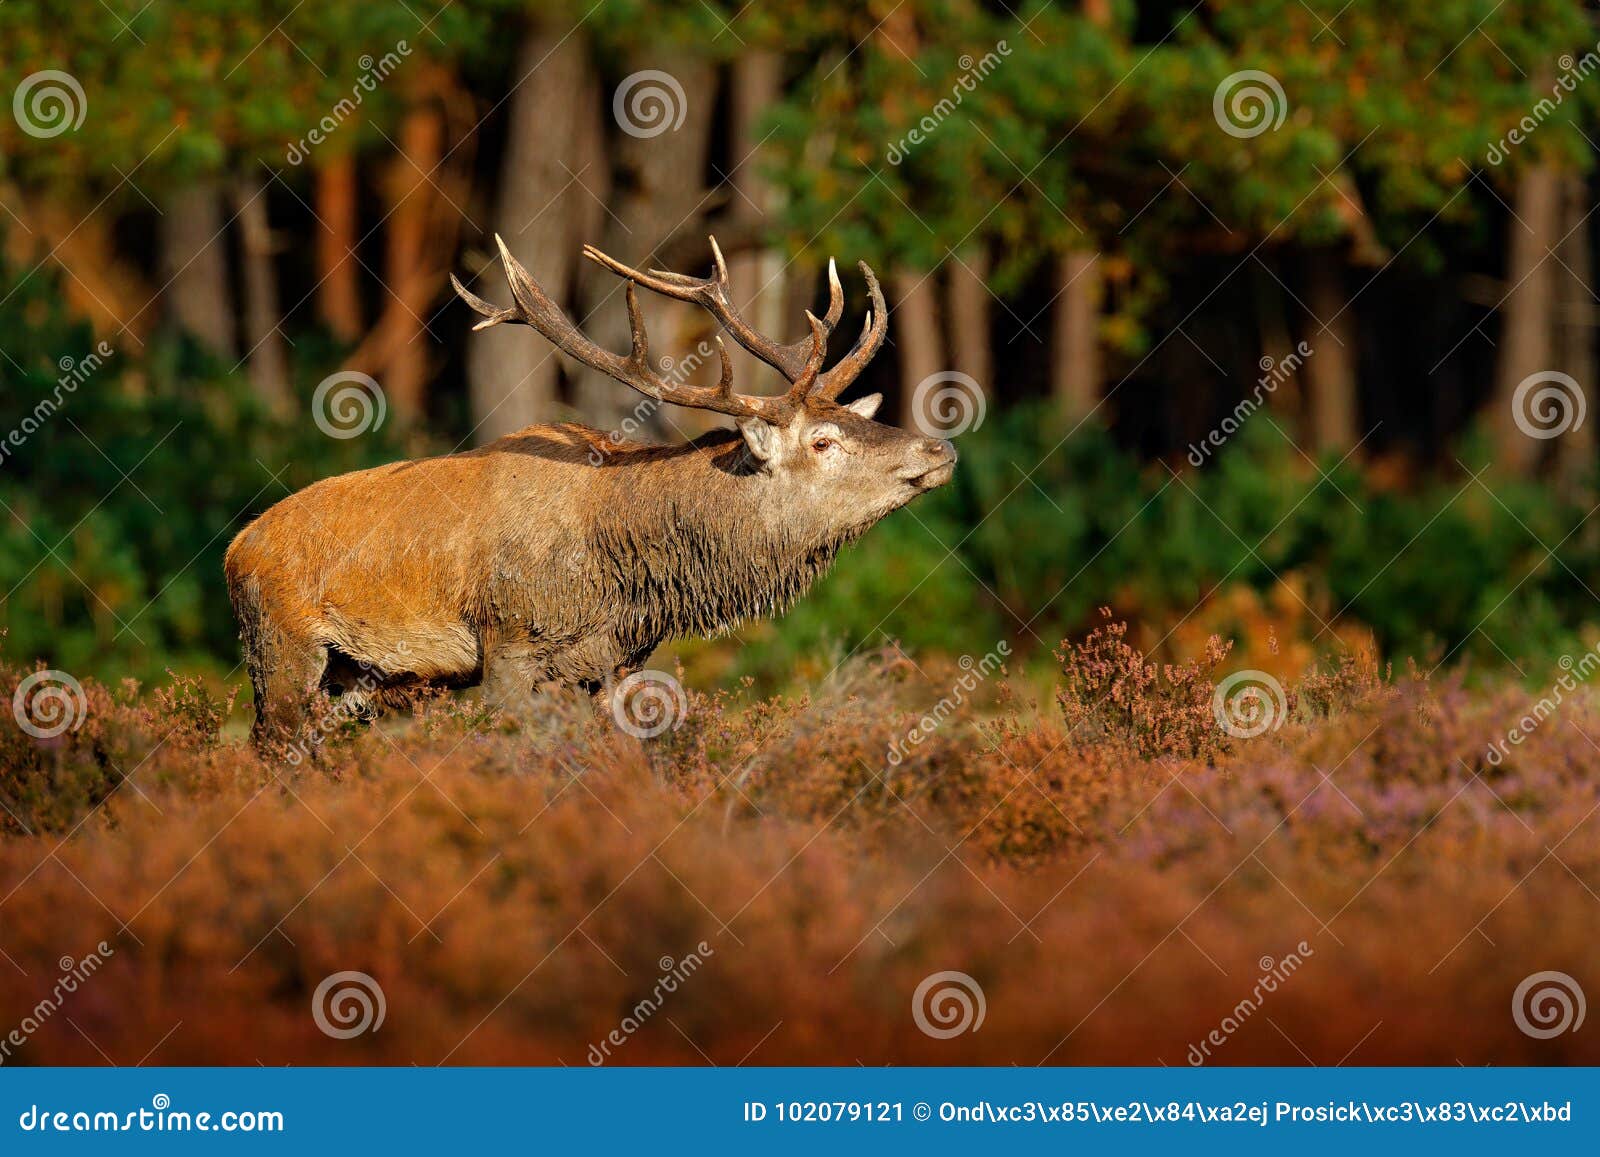 red deer, rutting season in np hoge veluwe, netherlands. deer stag, bellow majestic powerful adult animal outside wood, big anima